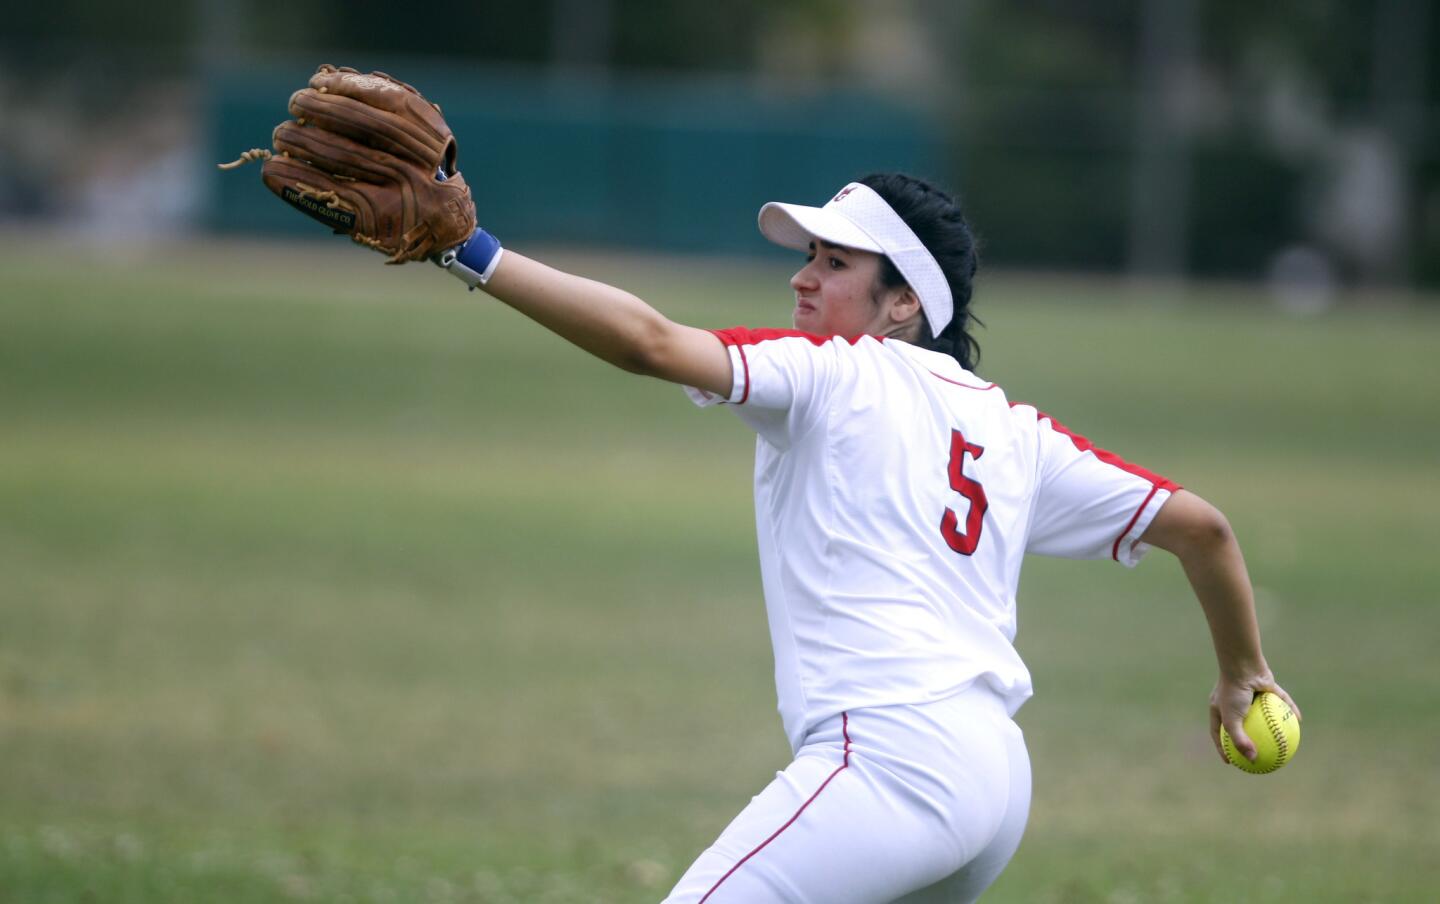 Photo Gallery: Glendale High School softball vs. Burroughs High School